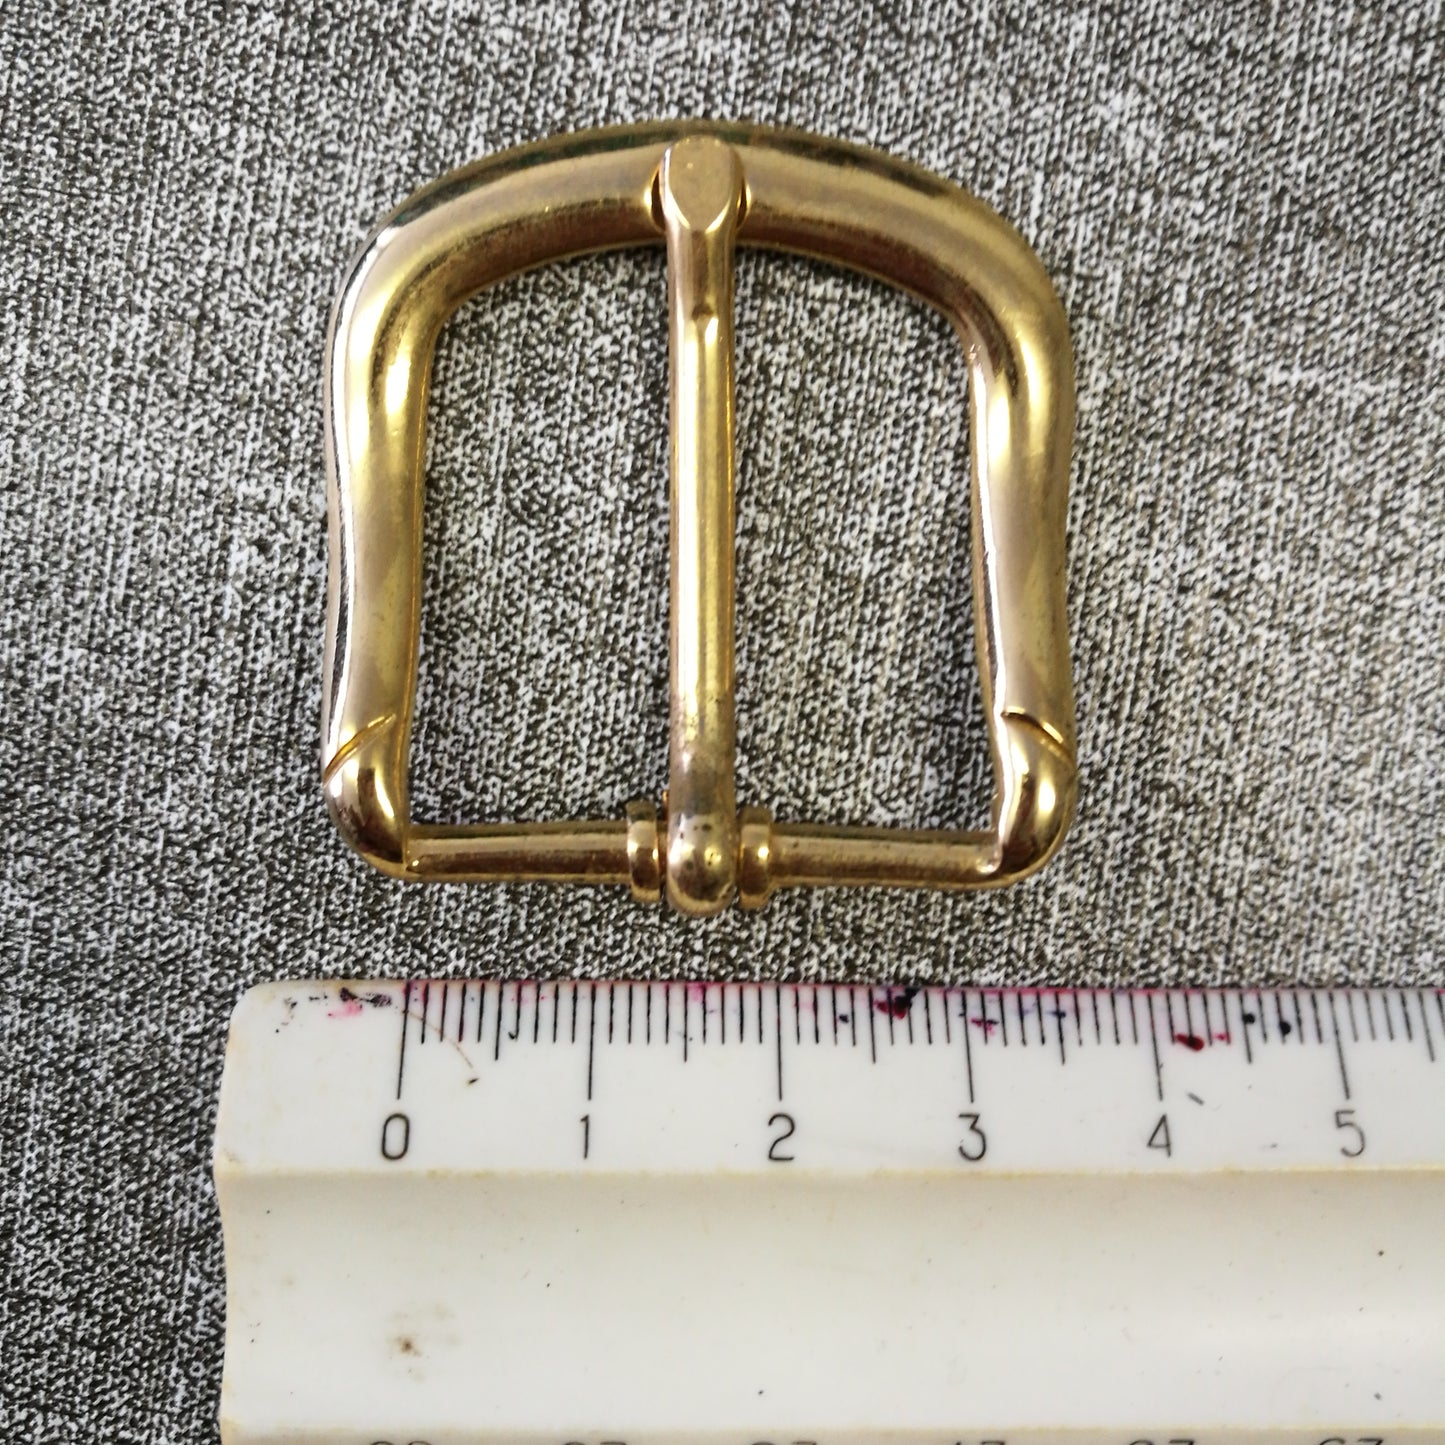 Belt buckle 3.0 x 3.0 cm gold